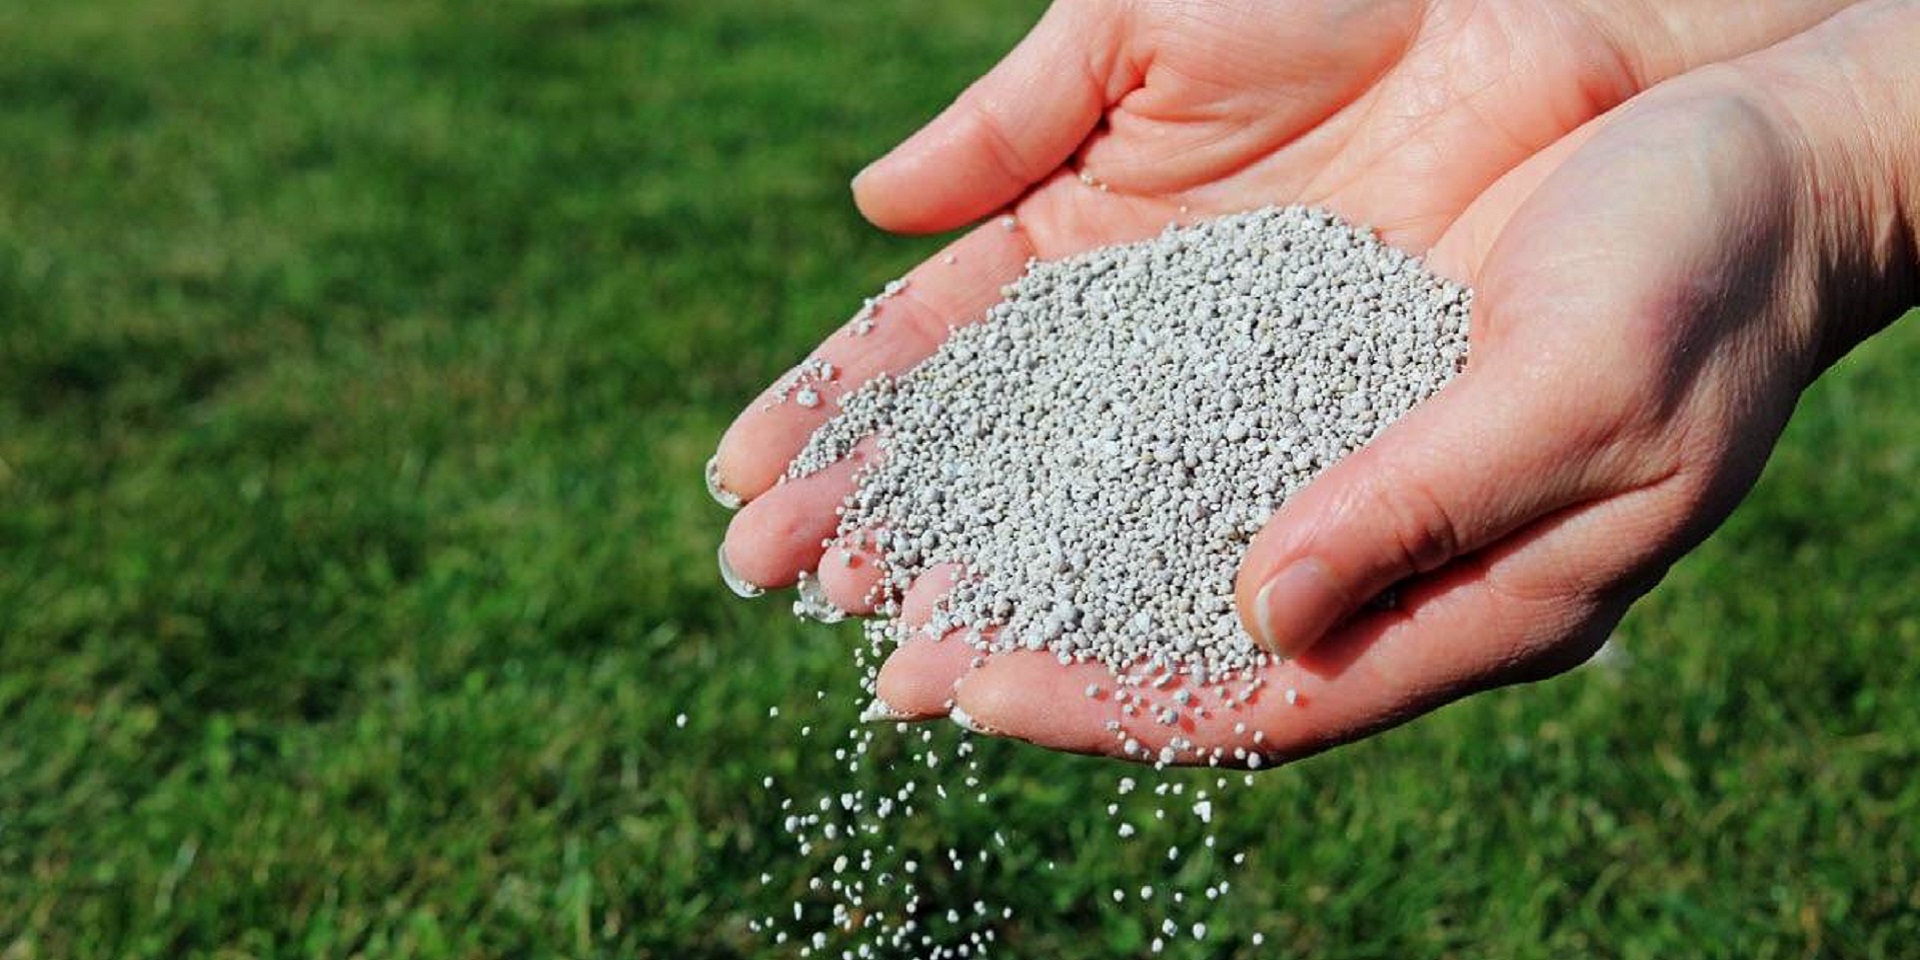 Spread fertilizer without a spreader